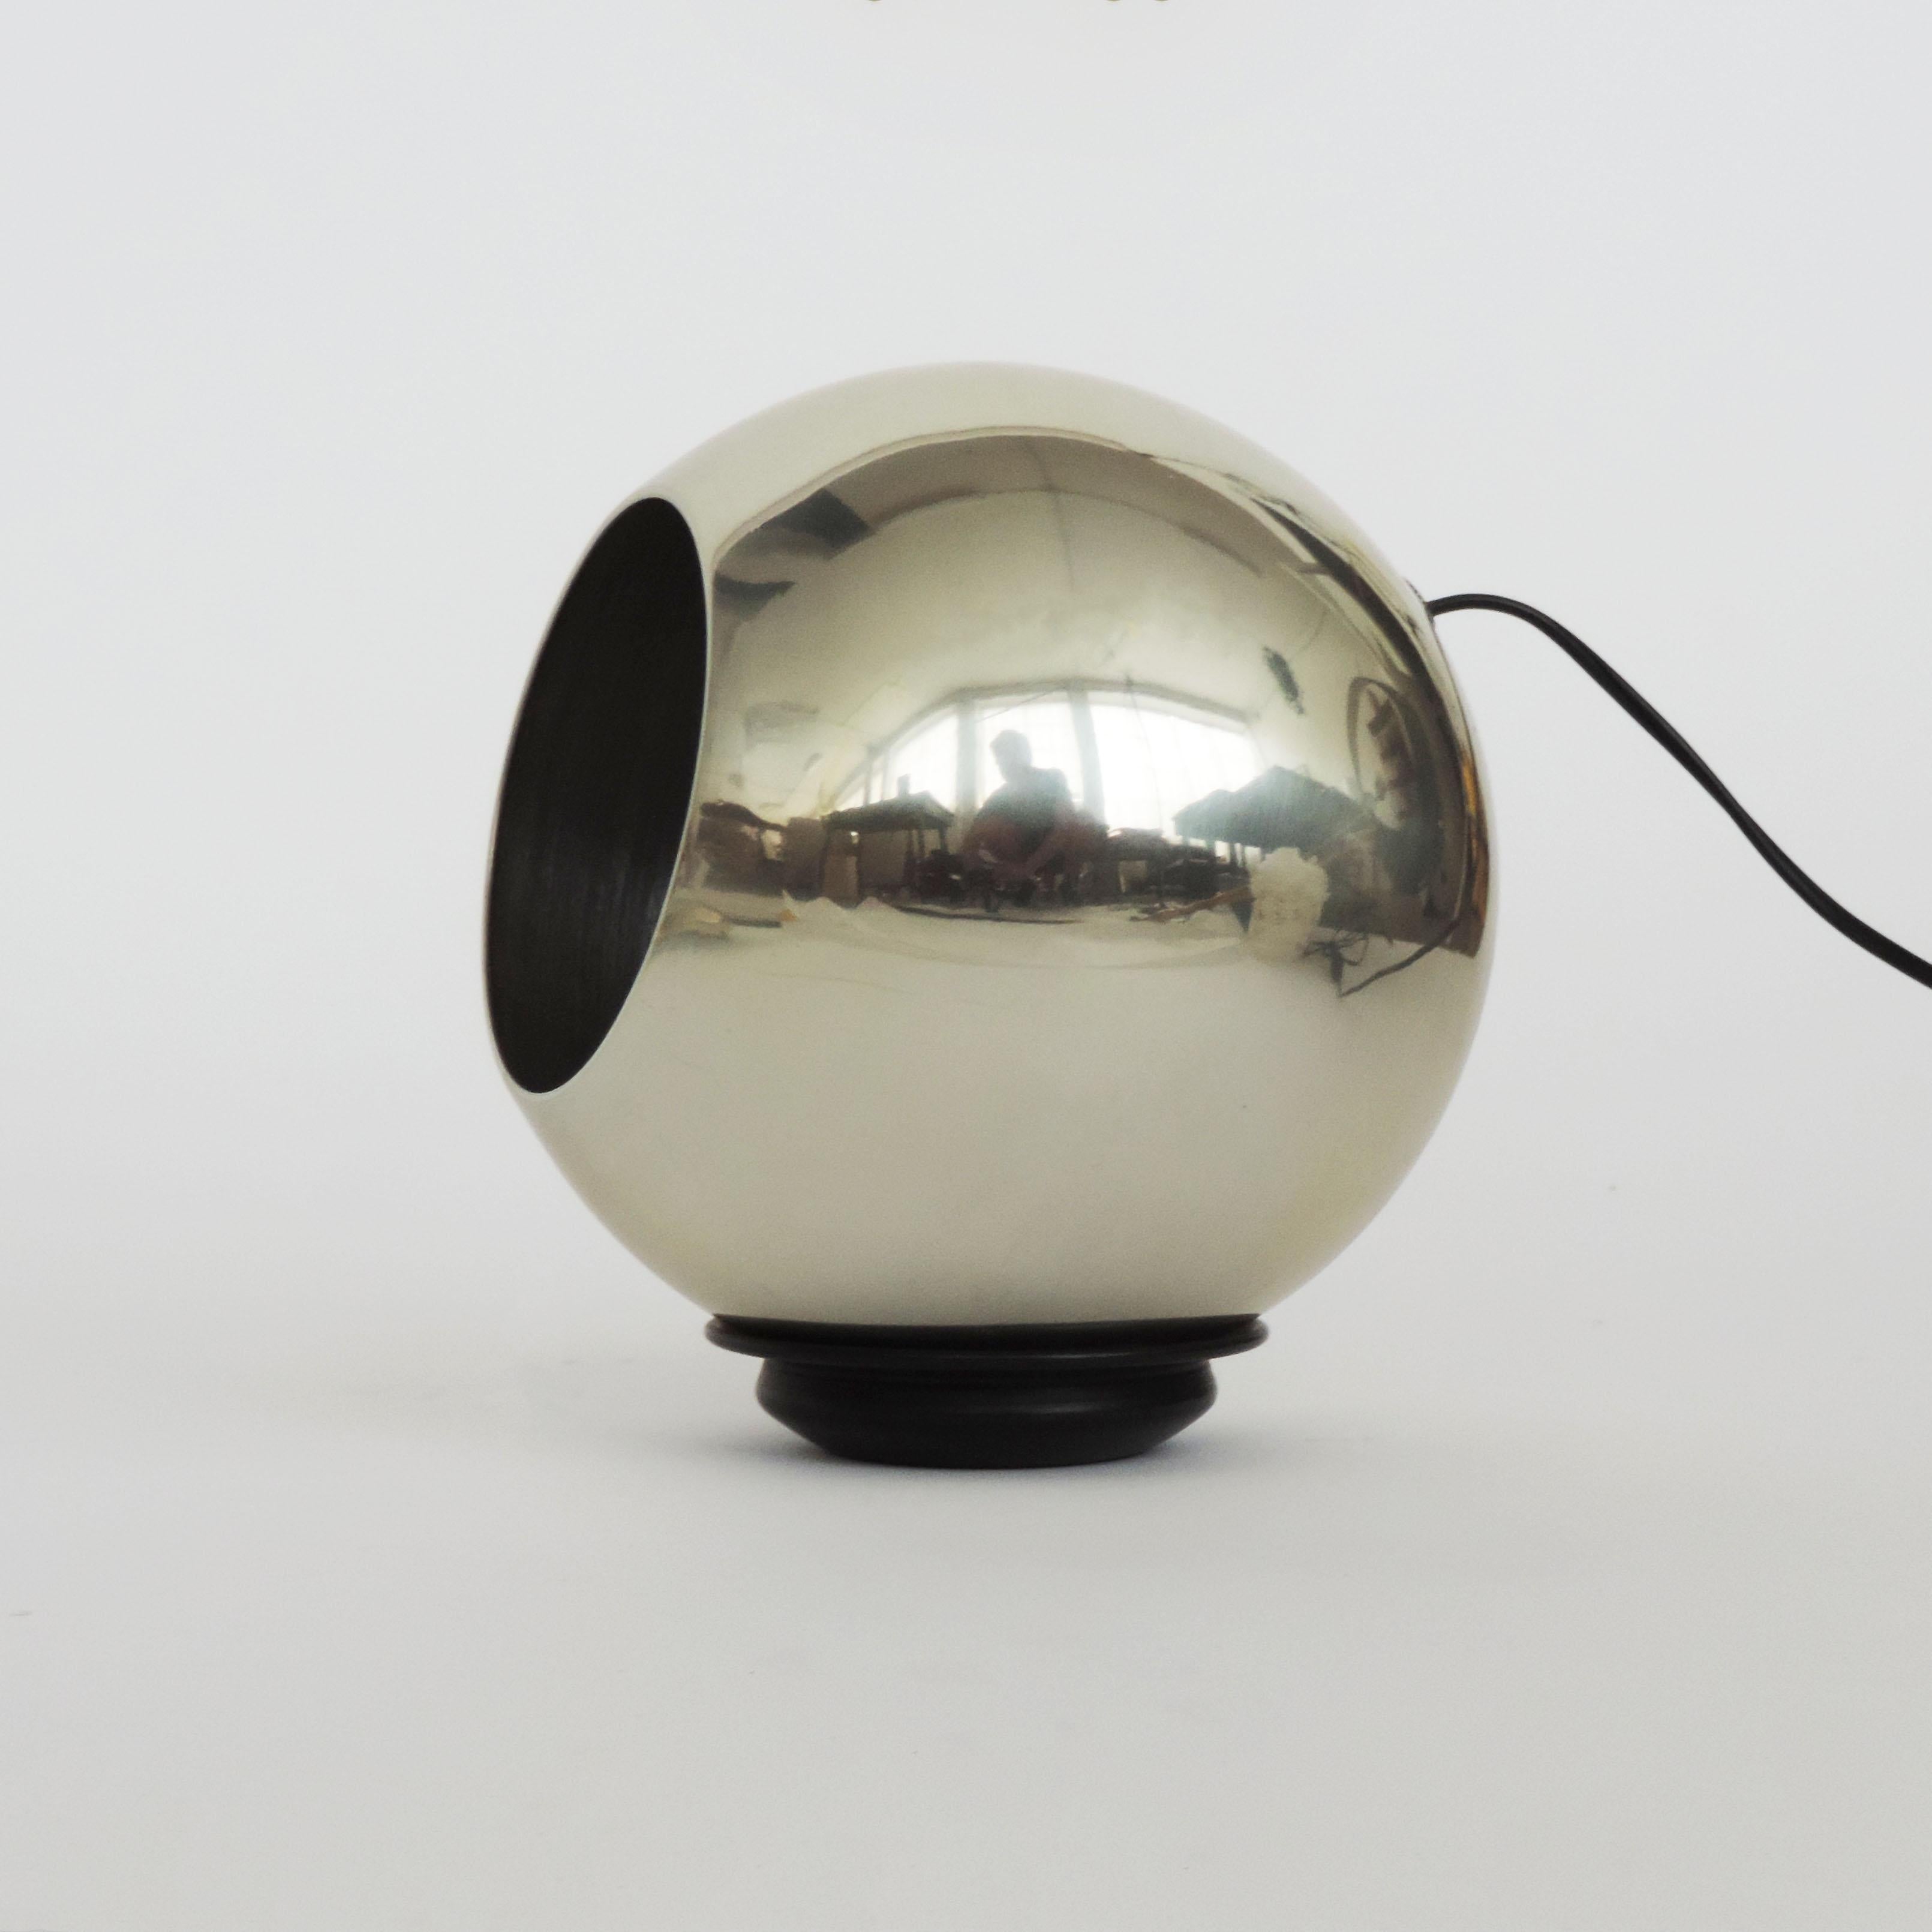 Italian Gino Sarfatti Iconic Ball Table Lamp for Arteluce Mod. 586, Italy 1960s For Sale